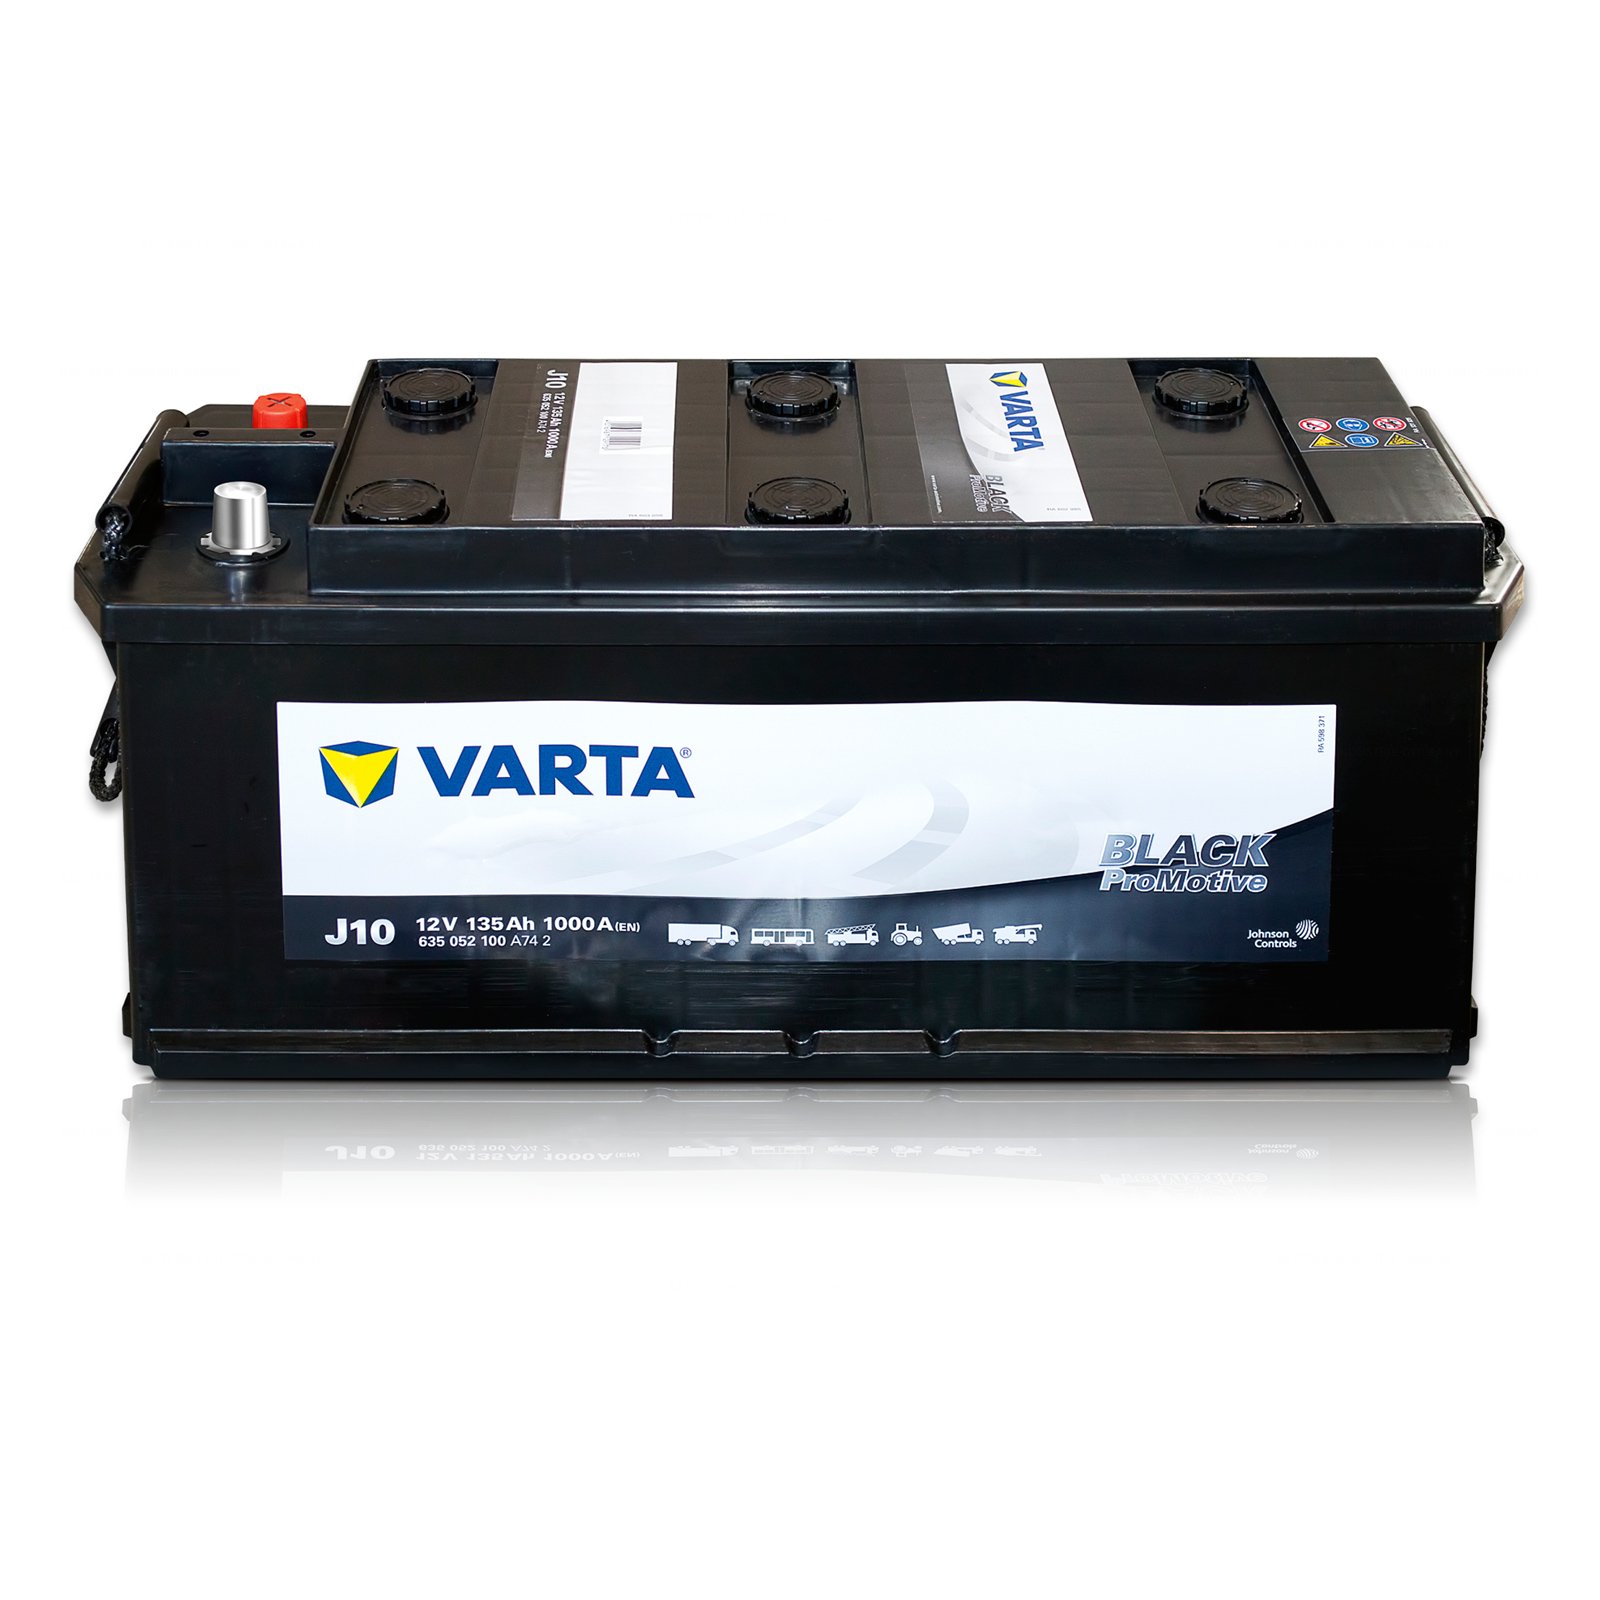 Varta Promotive Black J10-12 V / 135 Ah - 1000 A/EN SHD RF Nutzfahrzeugbatterie von Varta